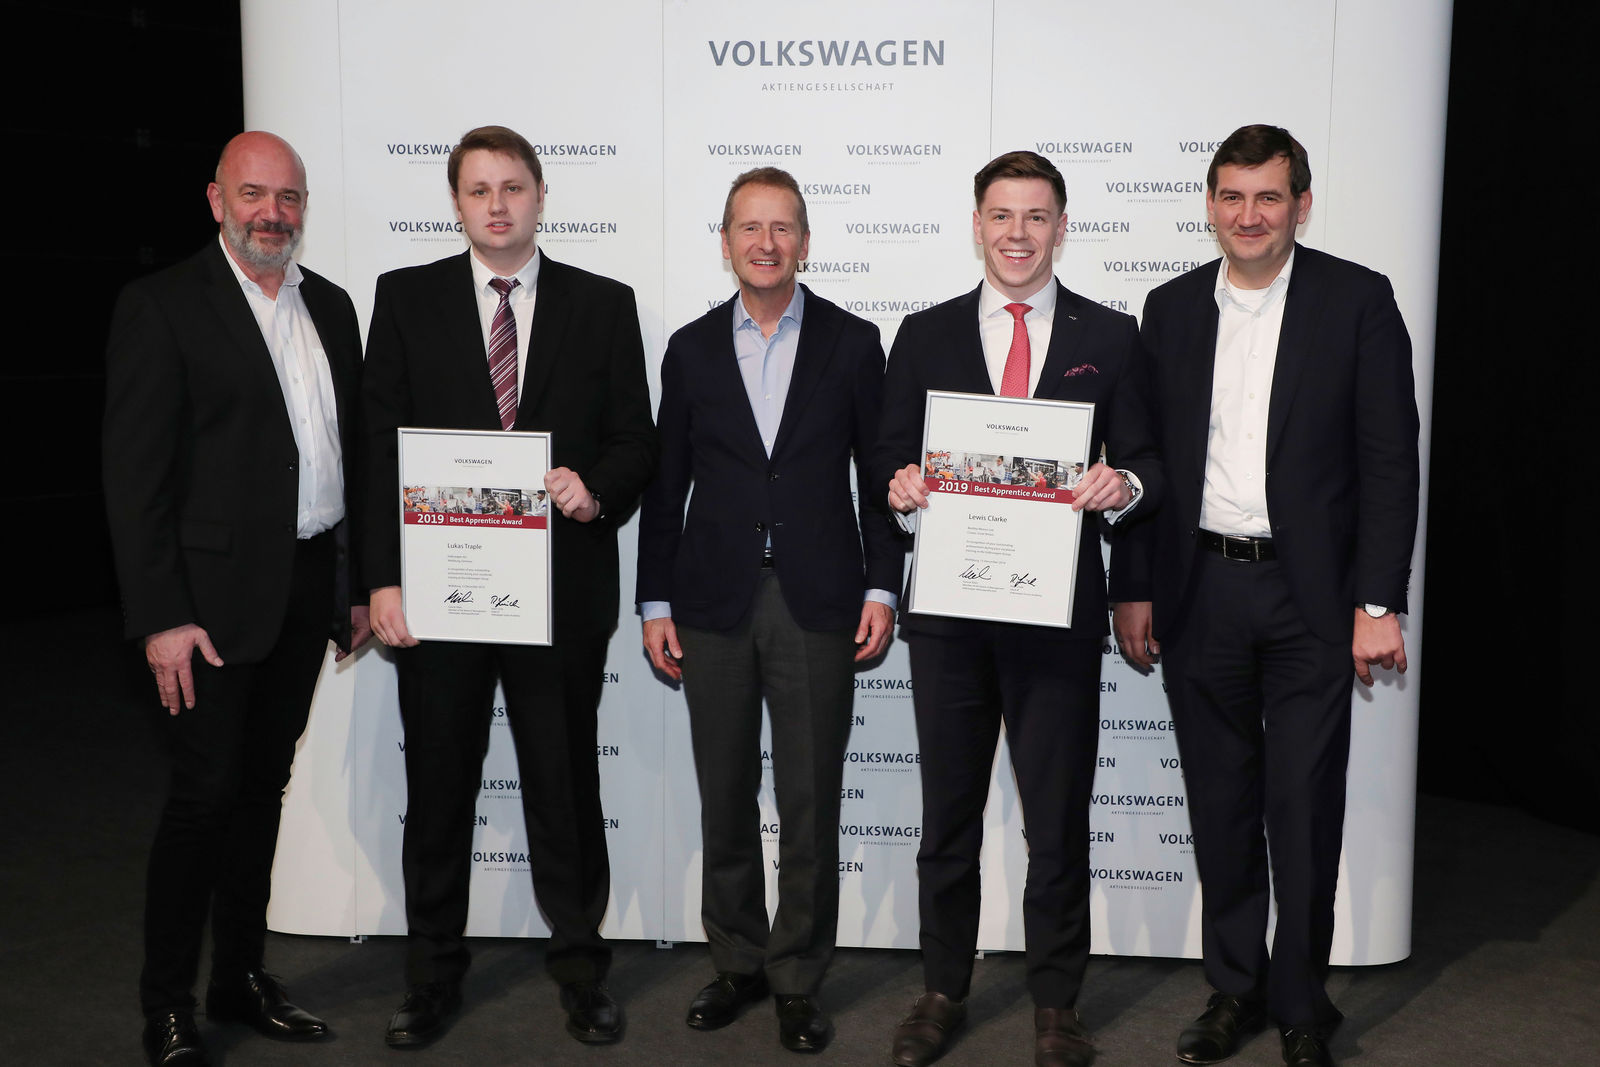 Best Apprentice Award 2019: Award Ceremony with Bernd Osterloh, Dr. Herbert Diess and Gunnar Kilian.